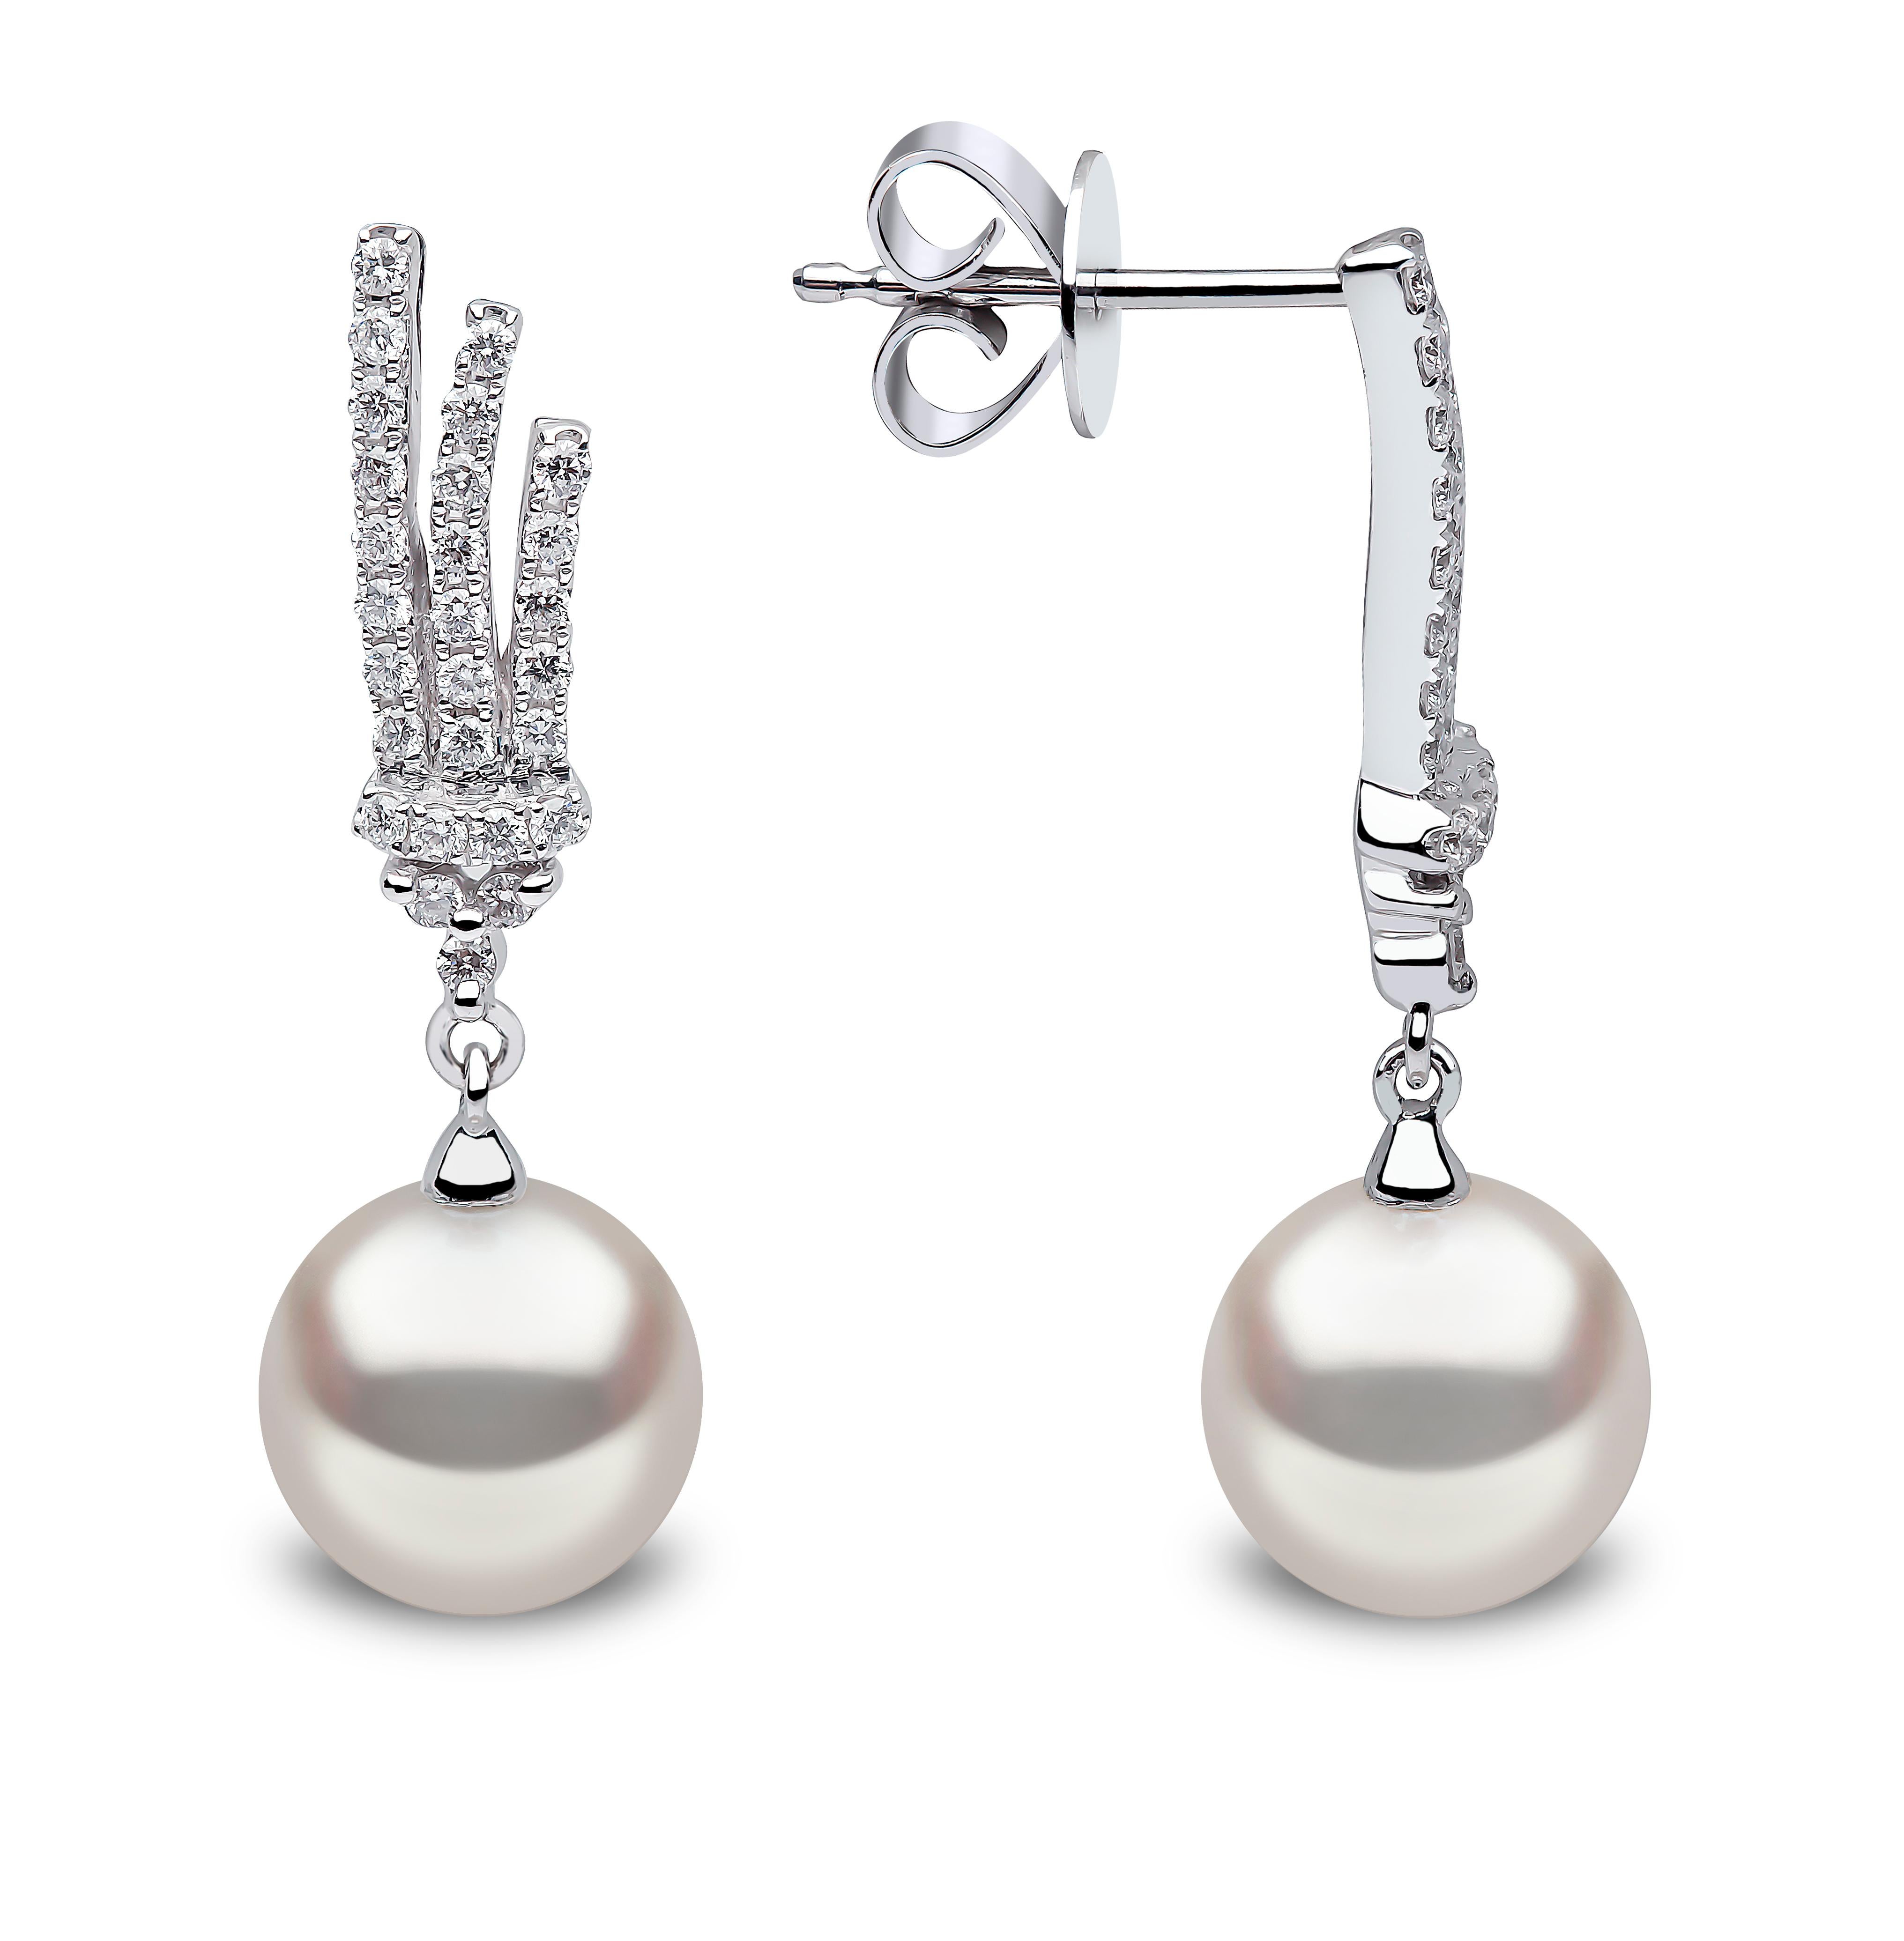 Round Cut Yoko London Freshwater Pearl and Diamond Earrings in 18 Karat White Gold